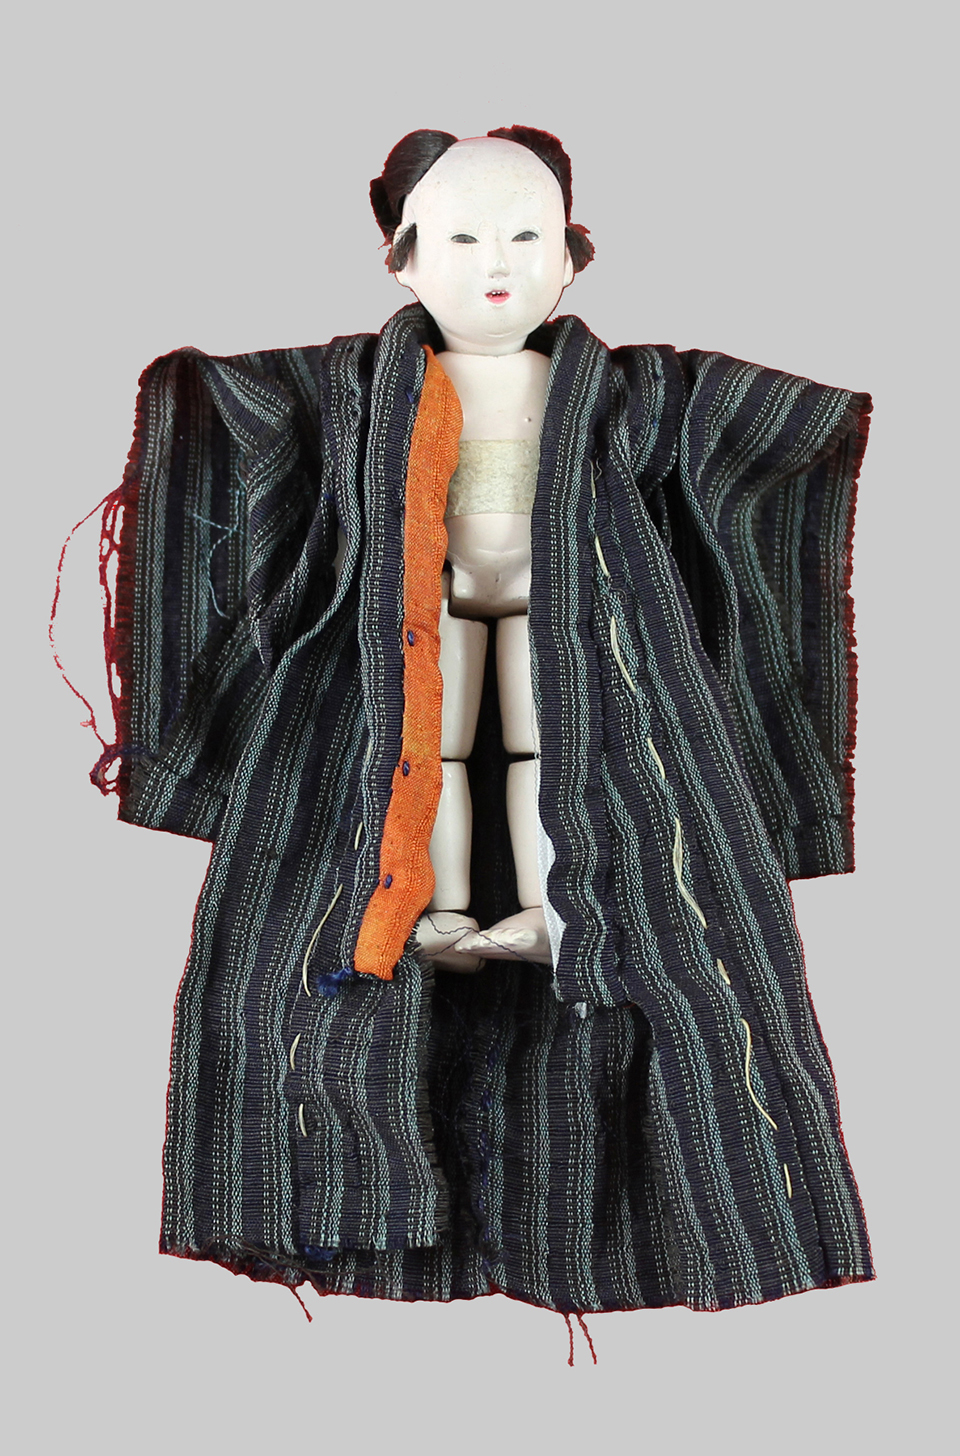 A small 19th century Japanese jointed mitsuori doll wearing a silk striped kimono.